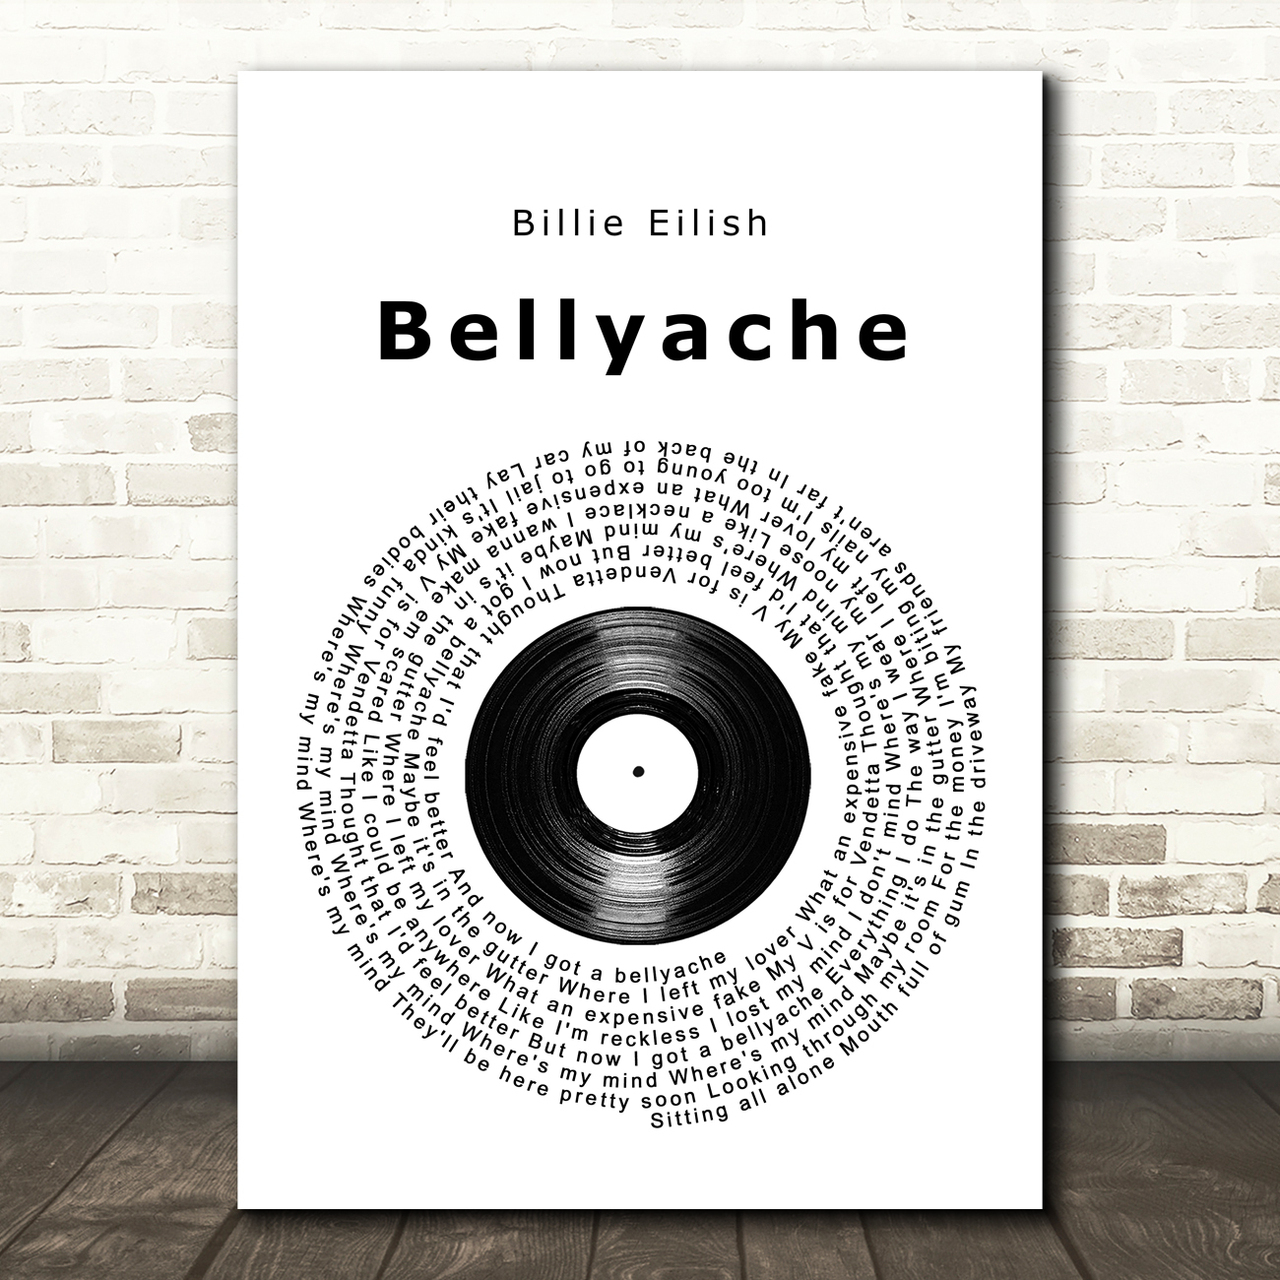 Billie Eilish Bellyache Vinyl Record Song Lyric Quote Music Poster Print